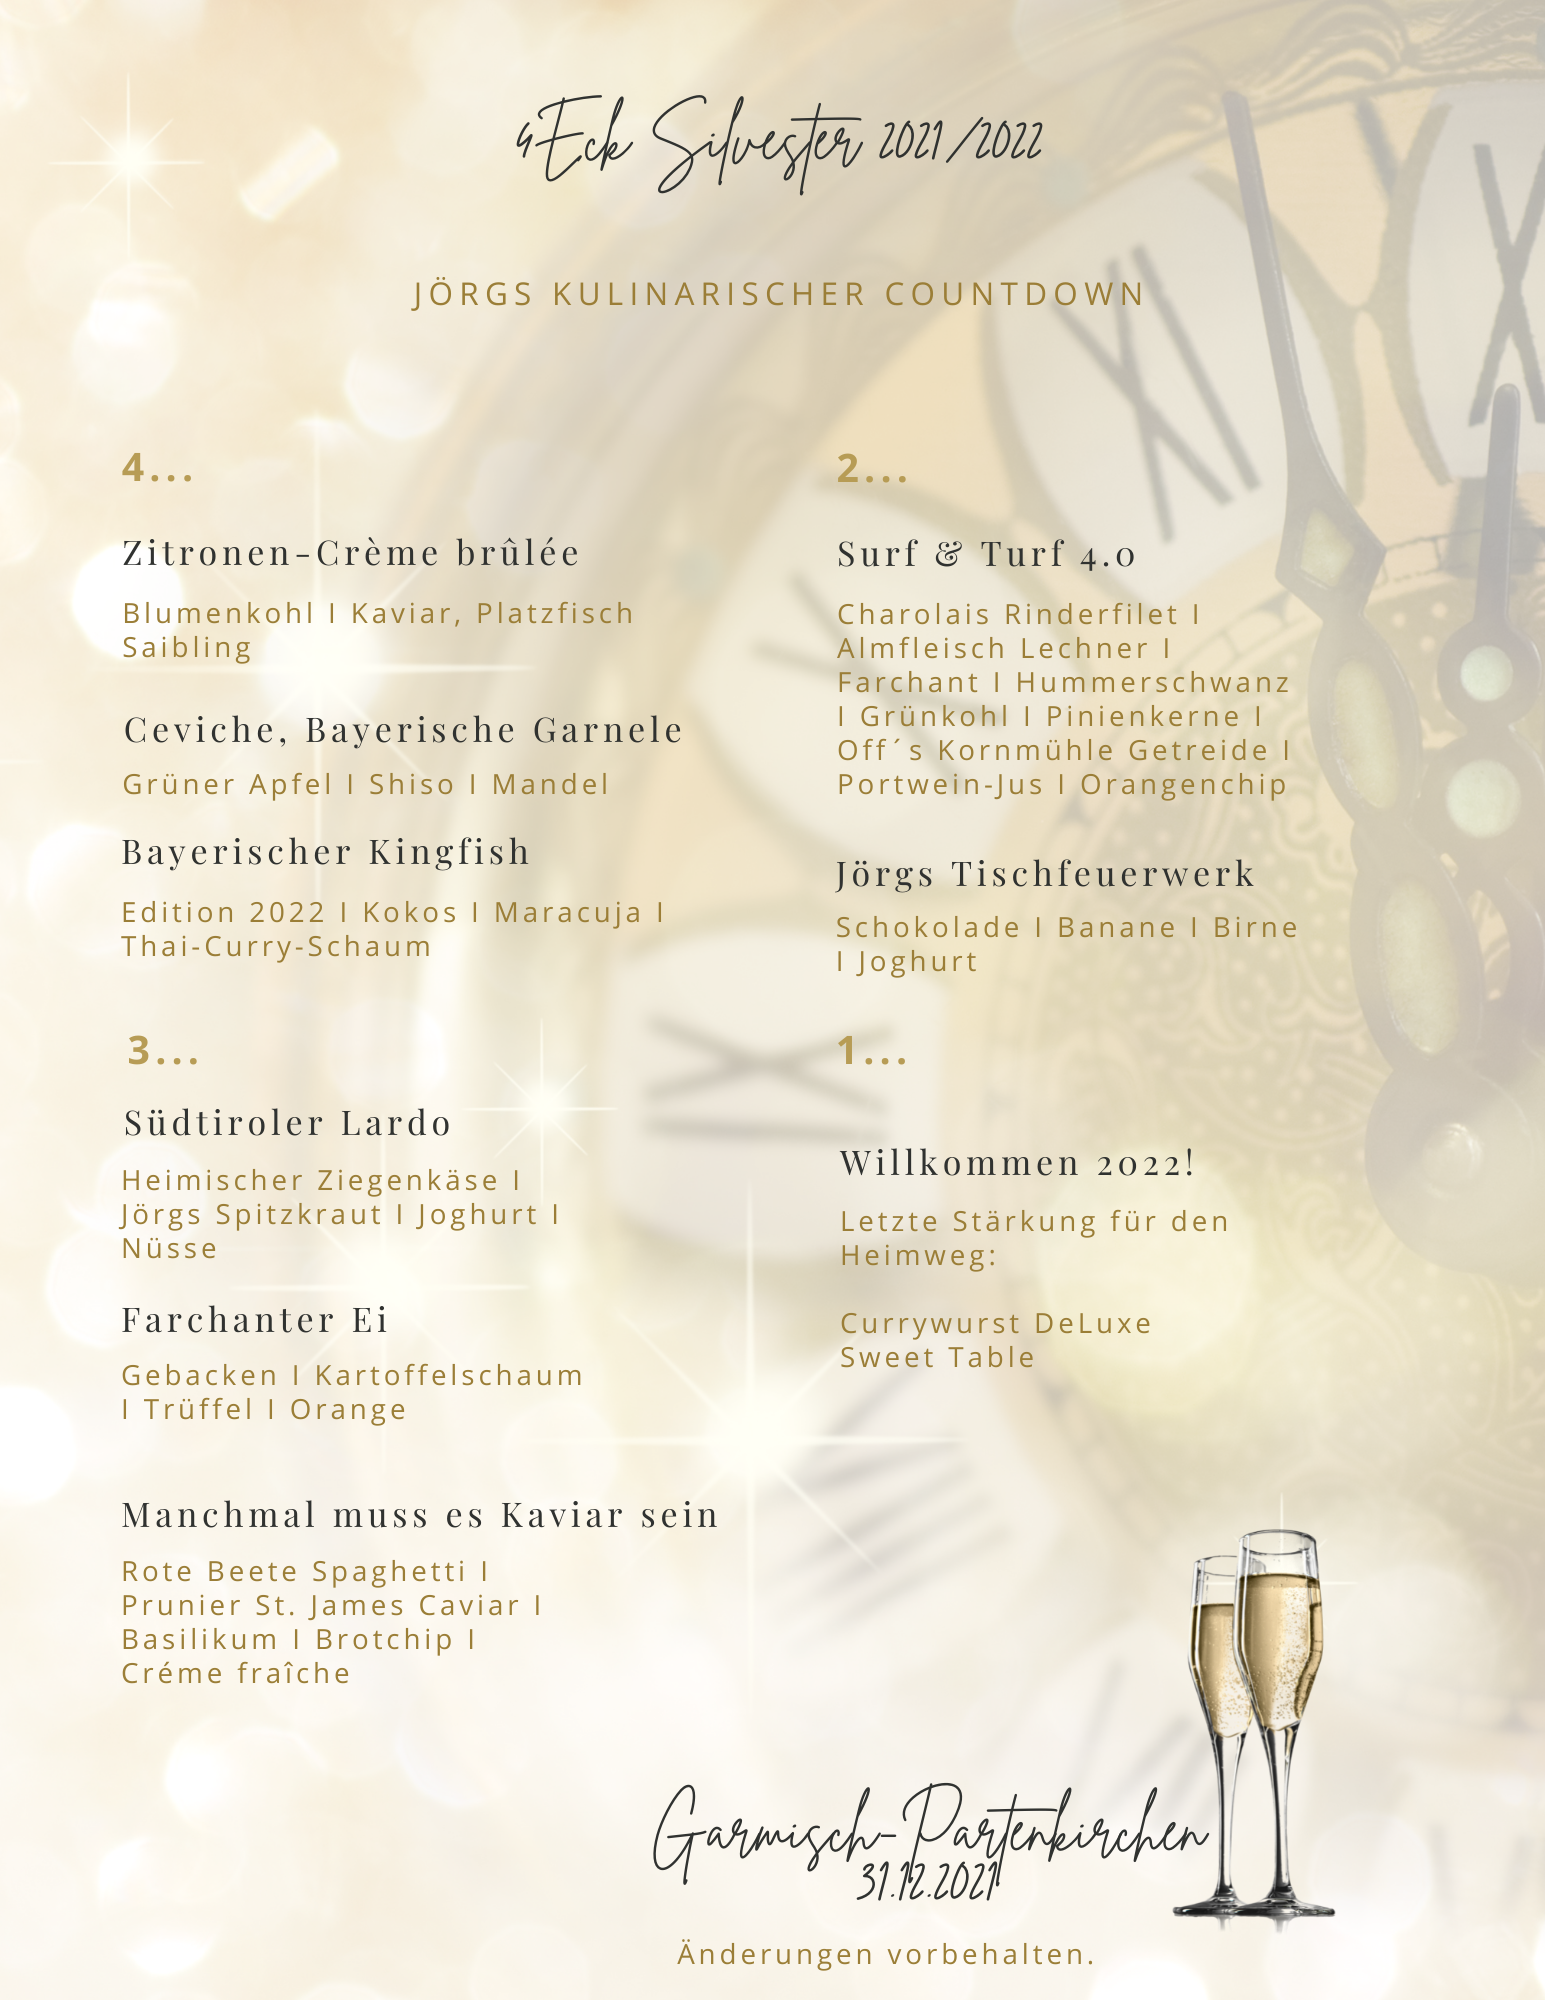 Silvestermenü 4Eck Restaurant Garmisch 2021 2022